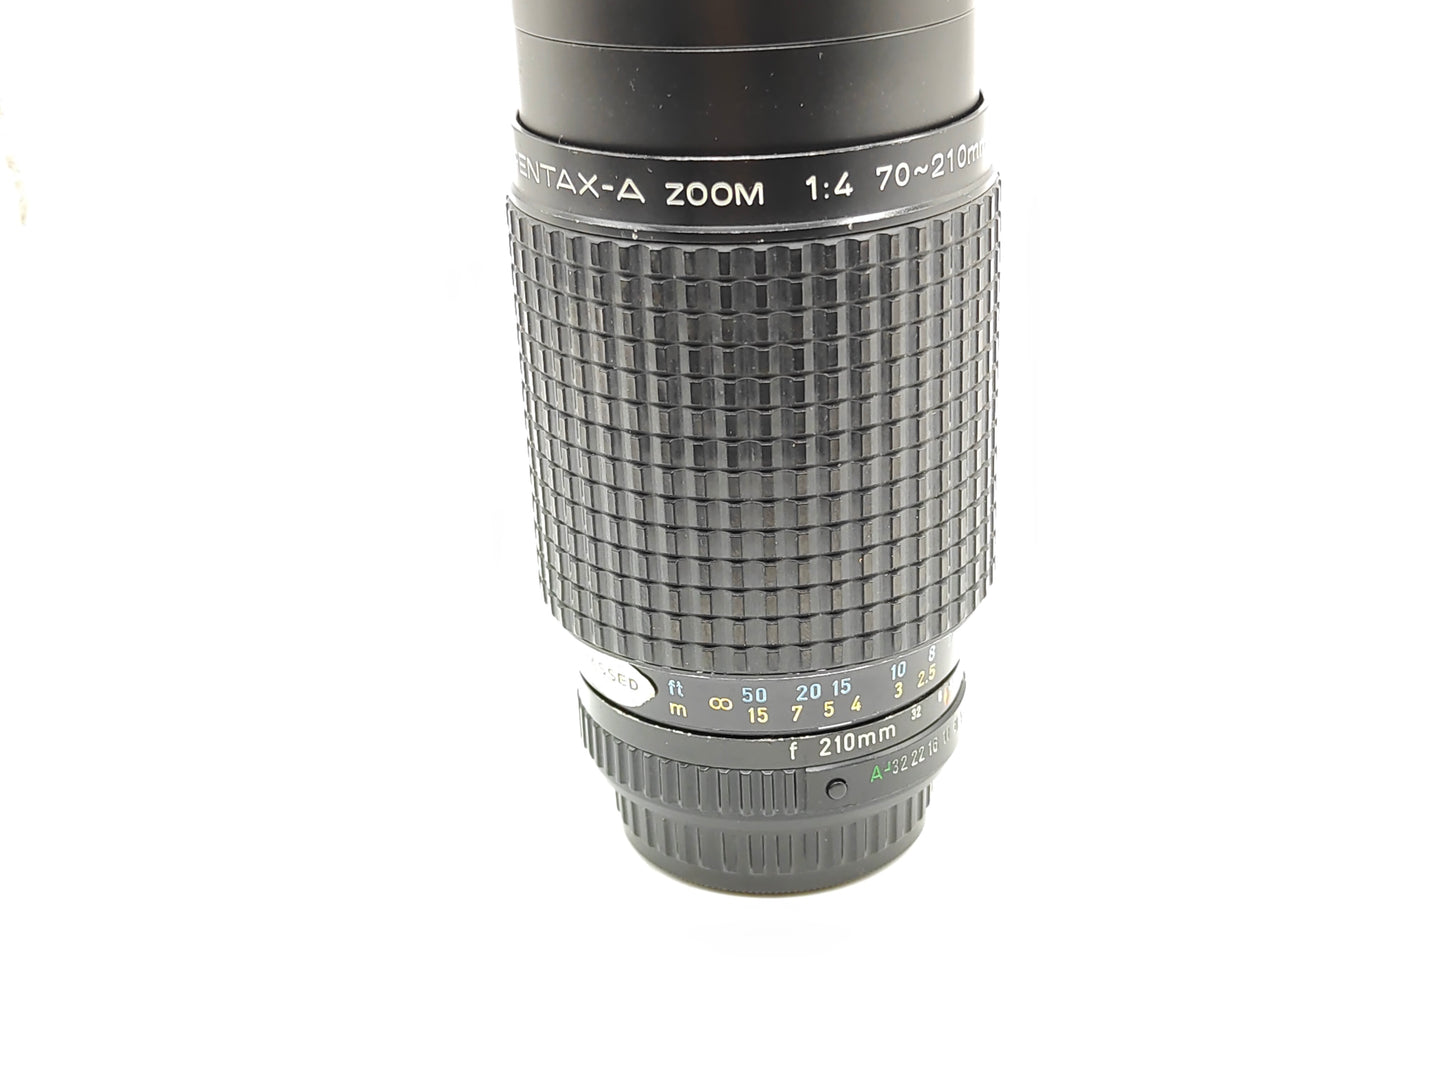 Pentax 70-210mm f/4 lens for Pentax K1000 / MX / ME / ME-Super